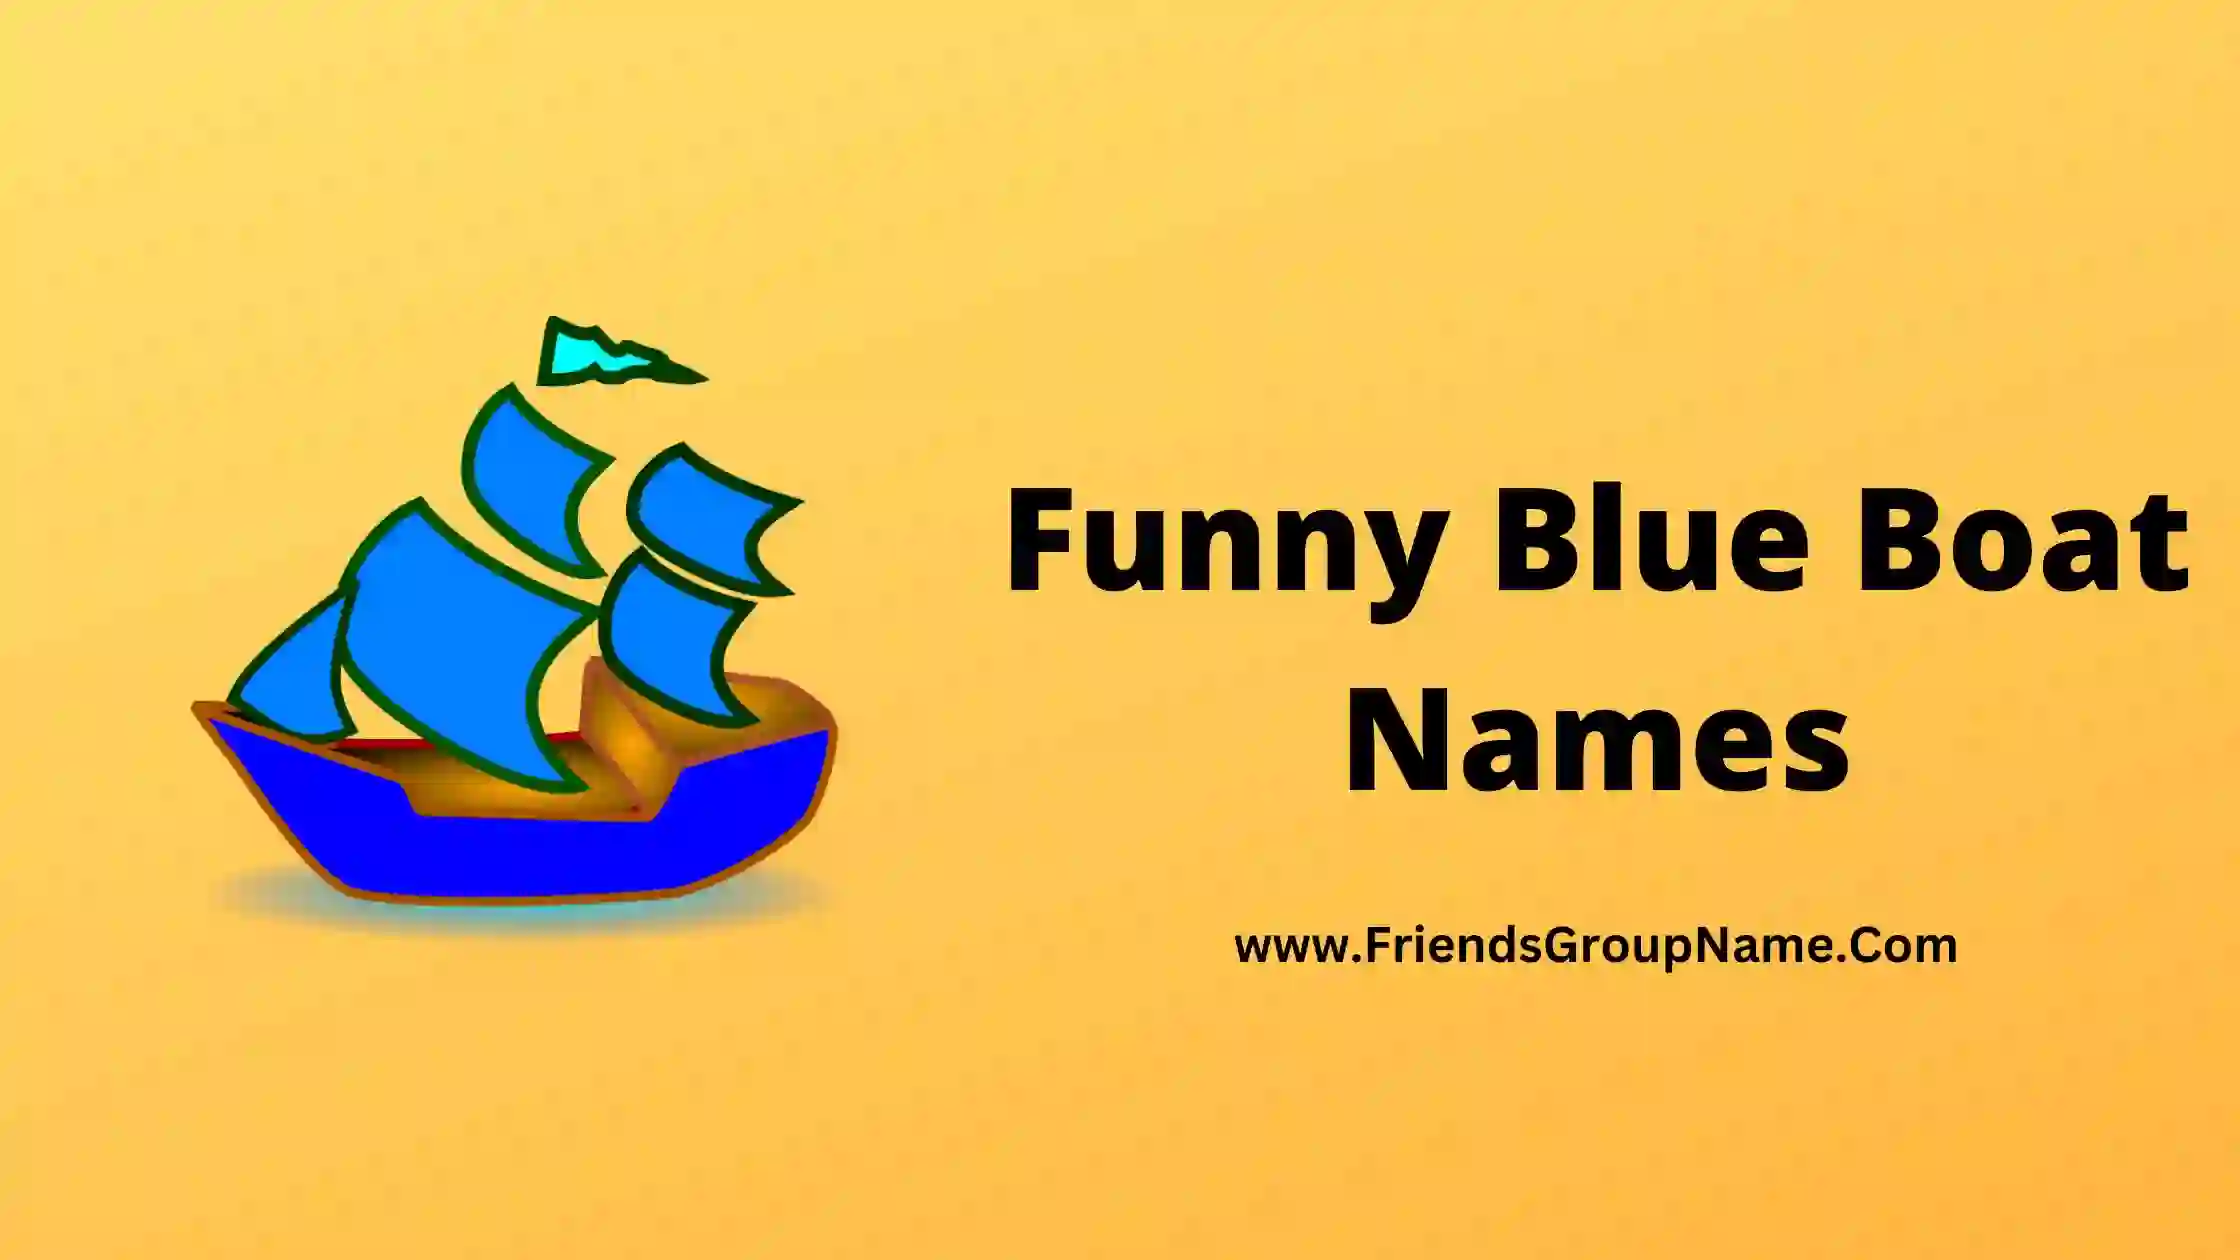 Funny Blue Boat Names